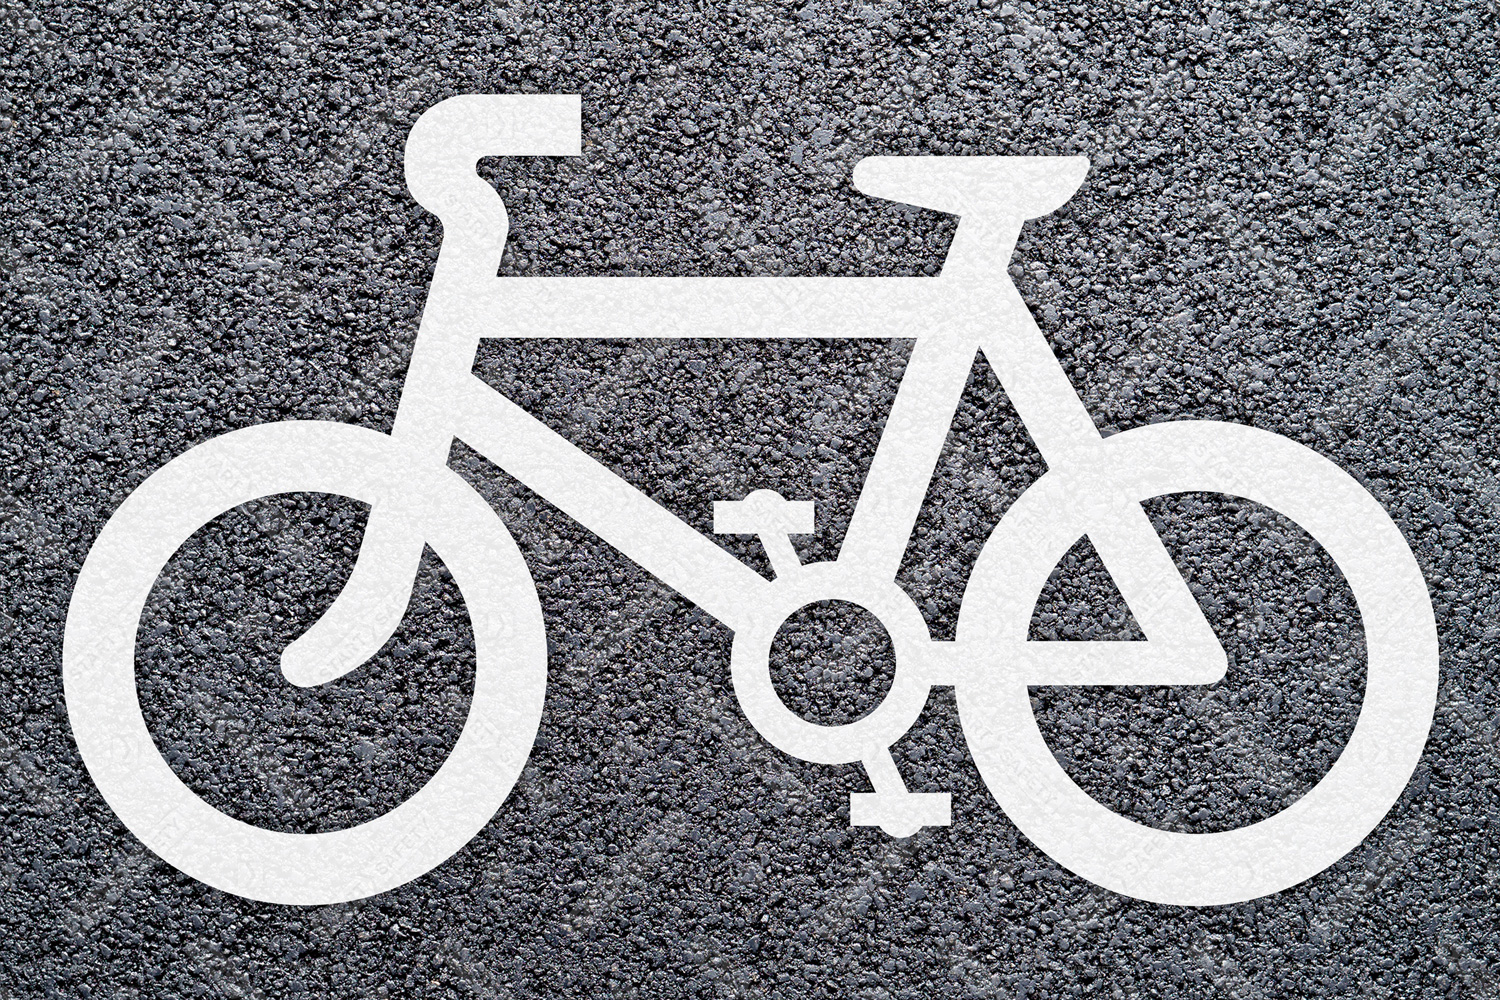 Thermoplastic bike lane symbol